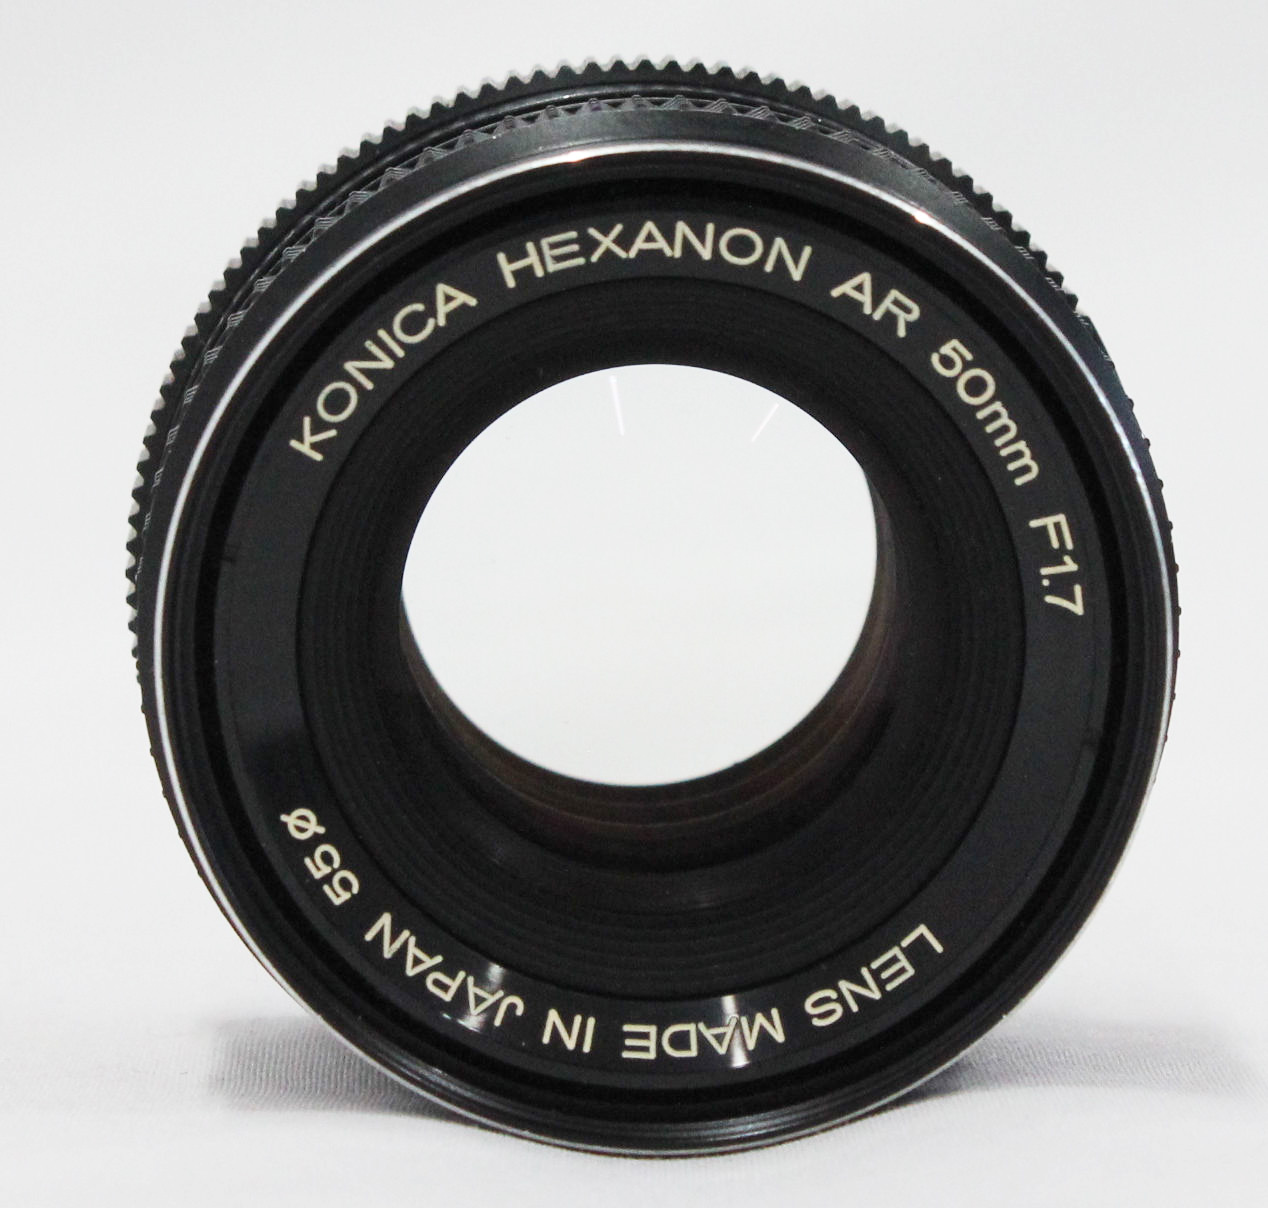  Konica HEXANON AR 50mm F/1.7 MF Lens from Japan Photo 2